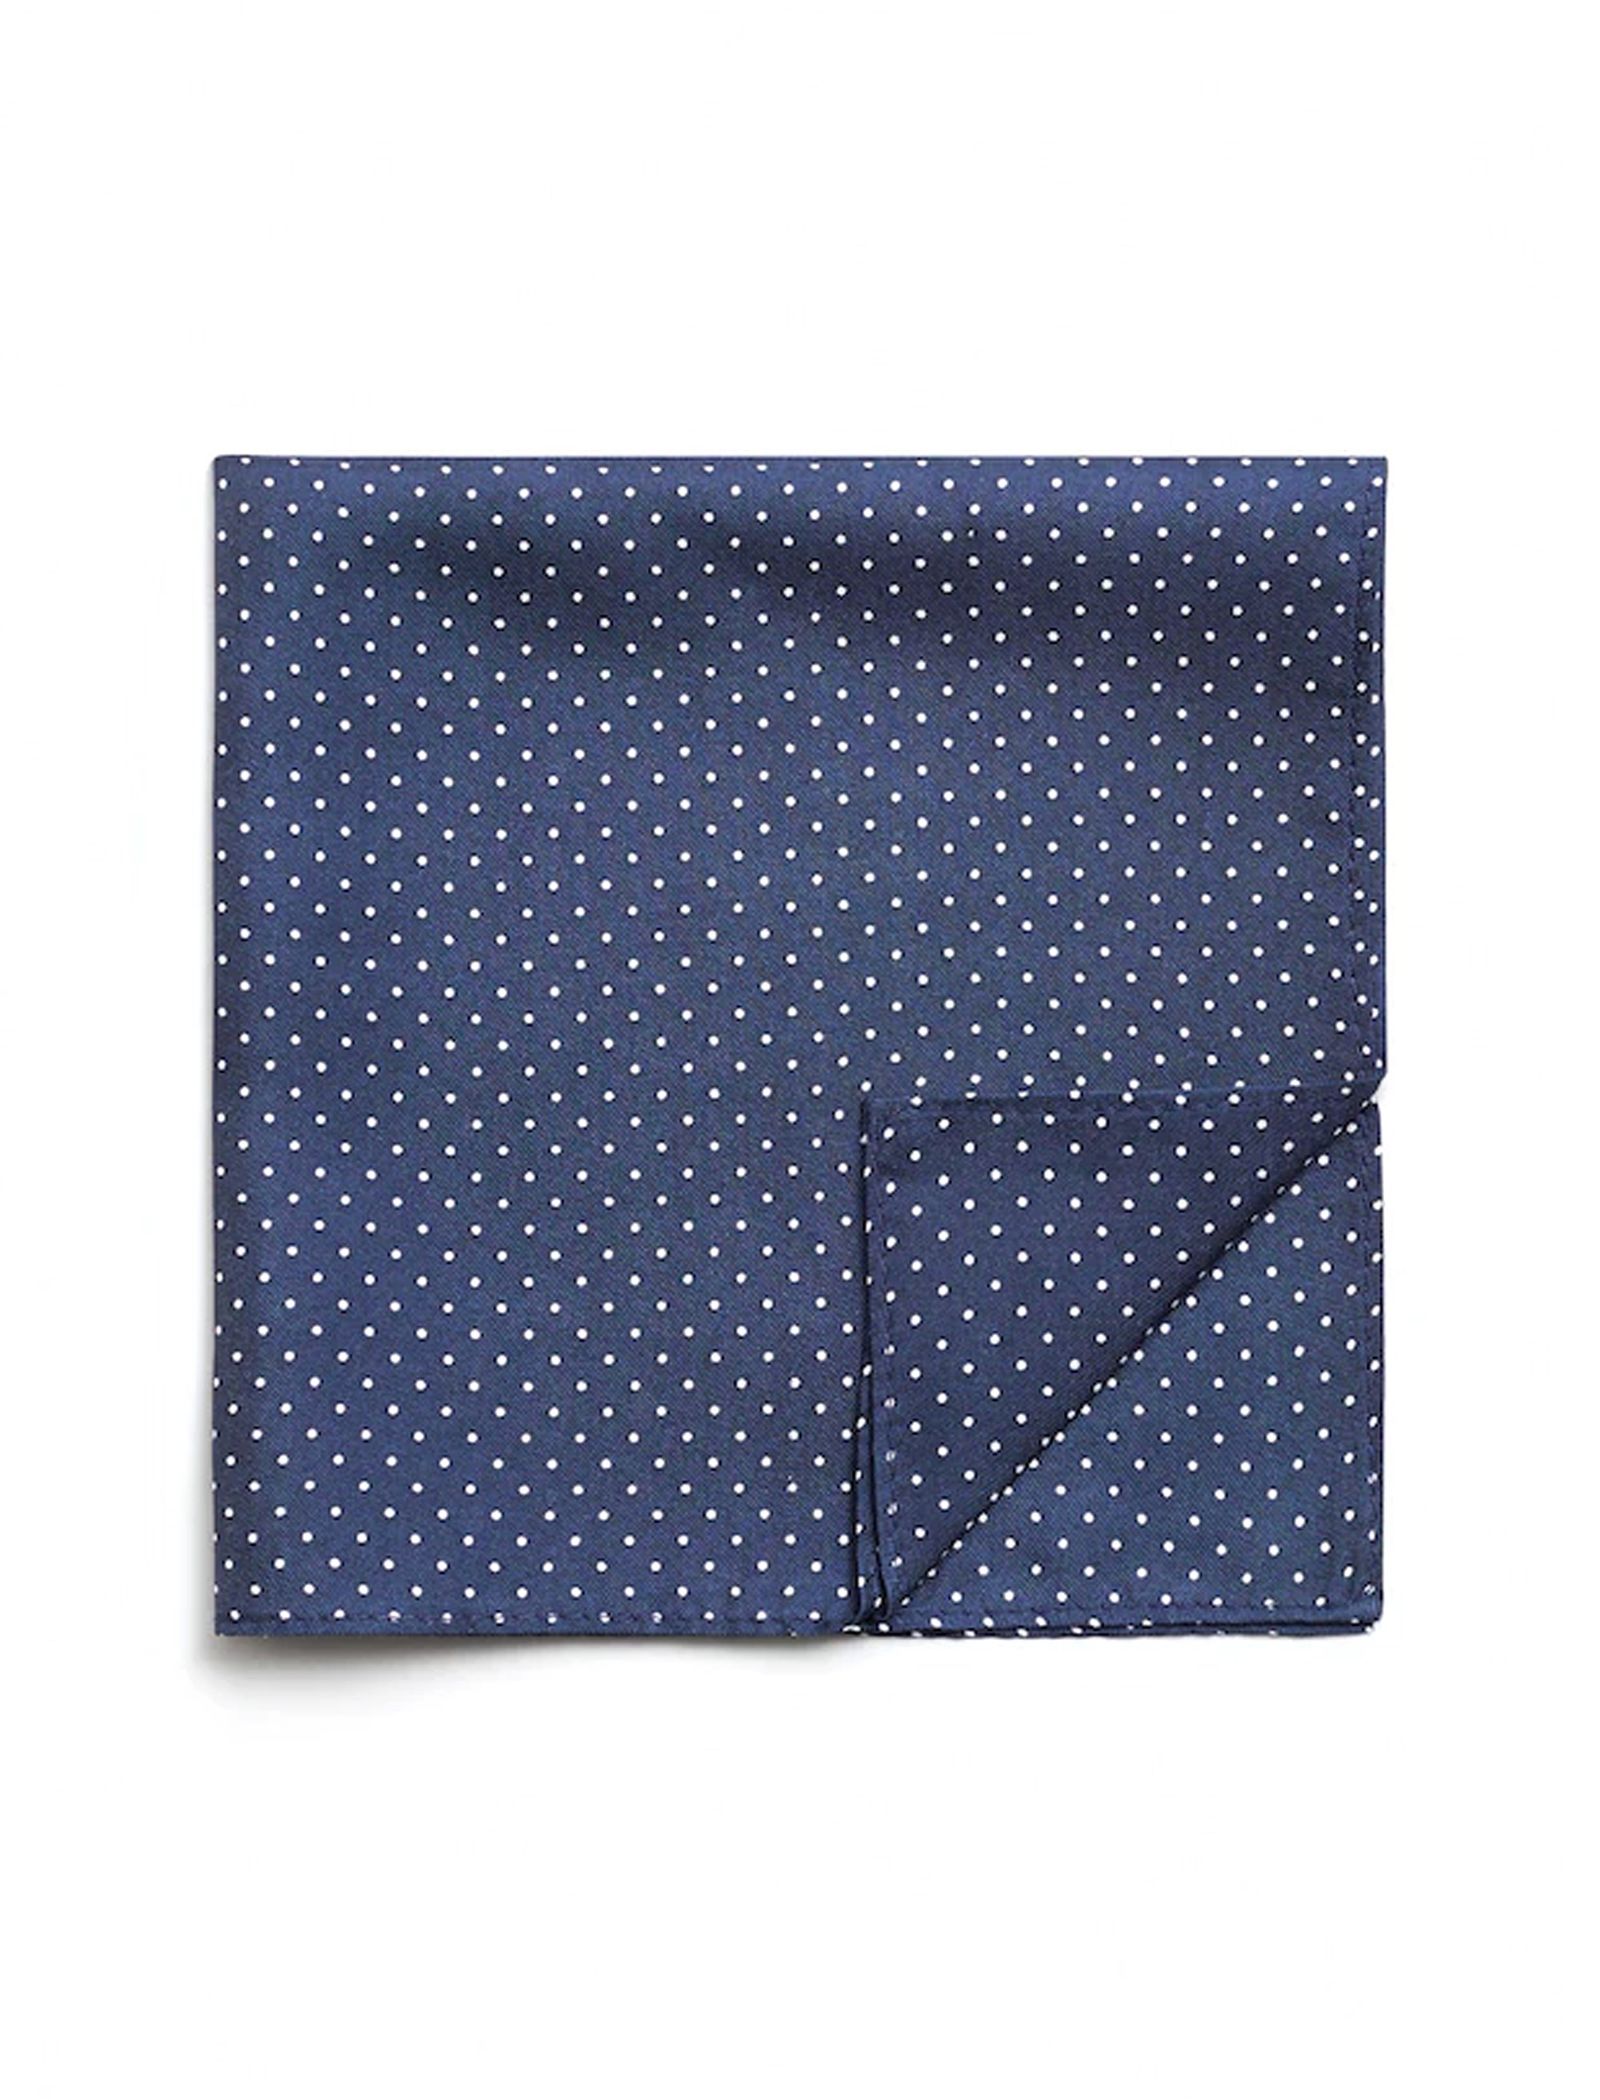 دستمال جیب ابریشم طرح دار مردانه - مانگو - سرمه اي - 1